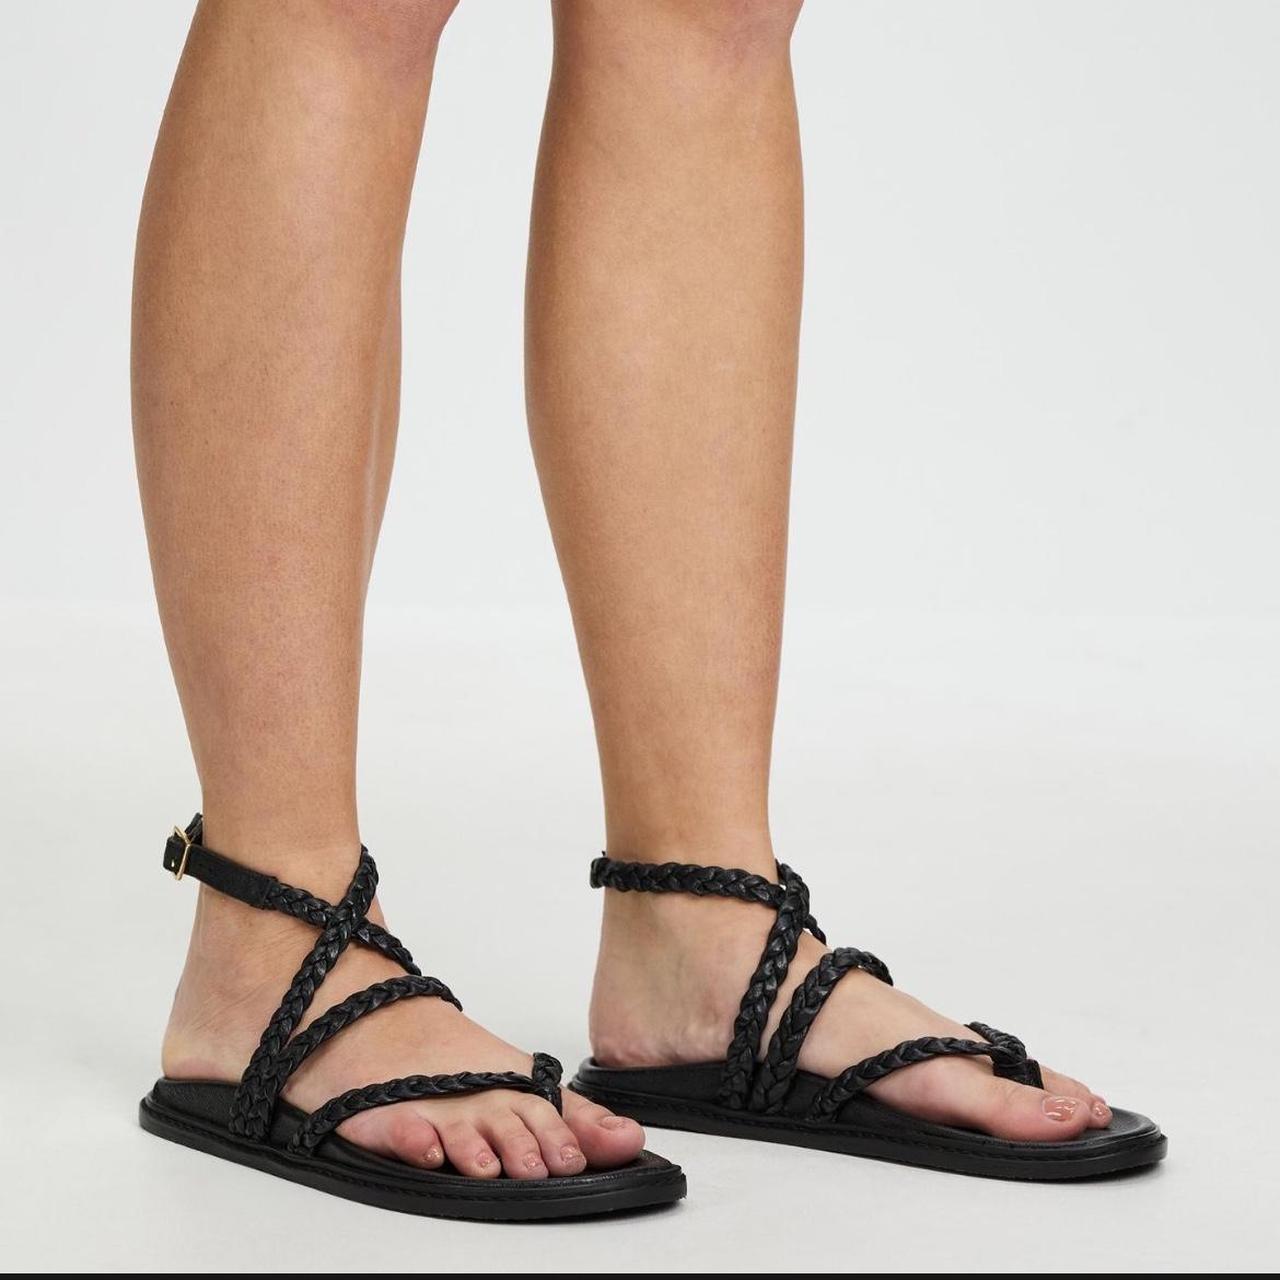 Human Premium - upper leather sandals Size 38 Au... - Depop